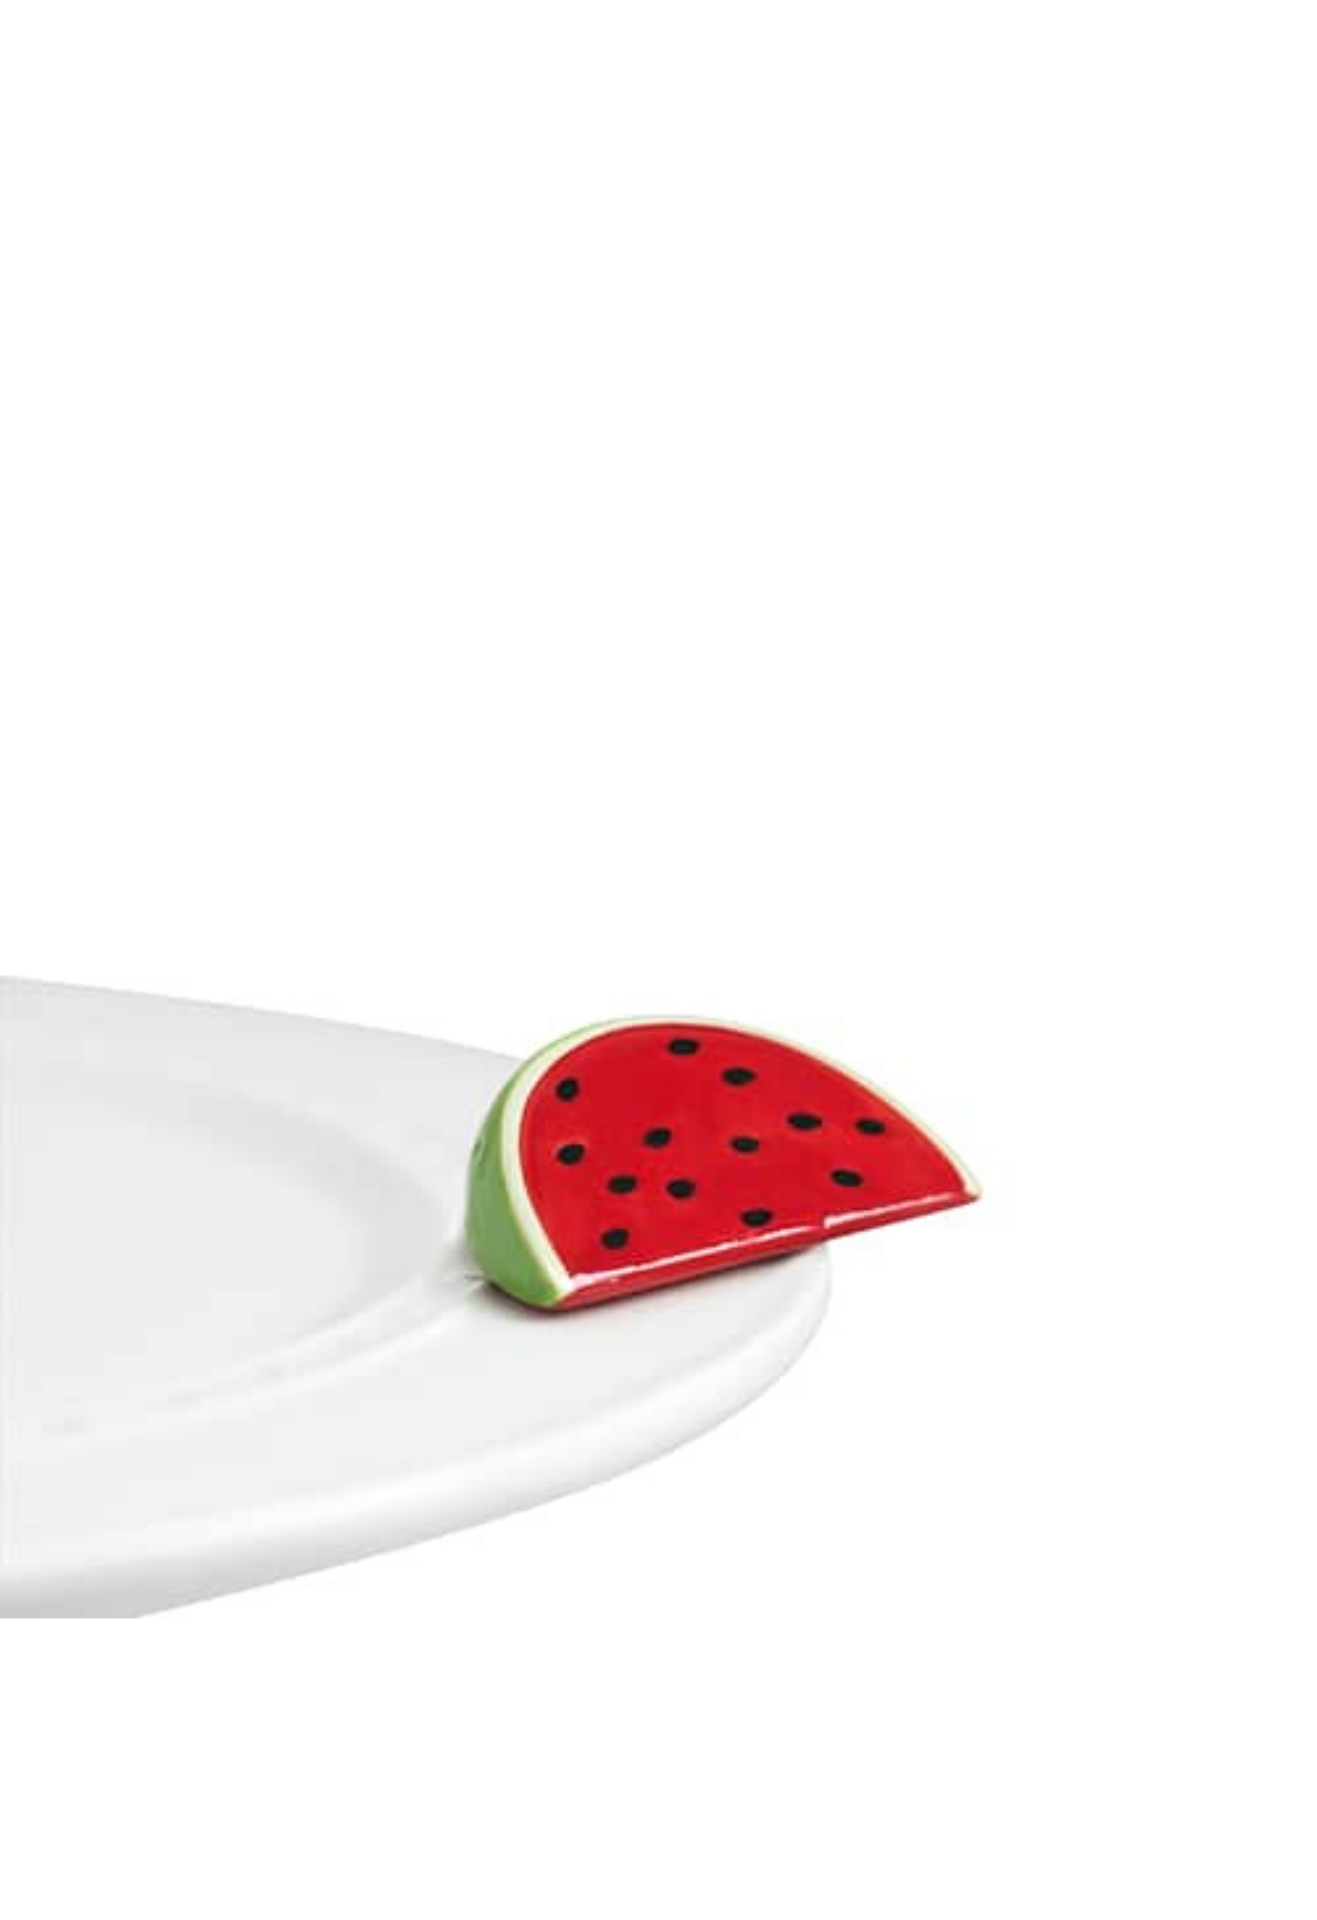 taste of summer (watermelon) A44